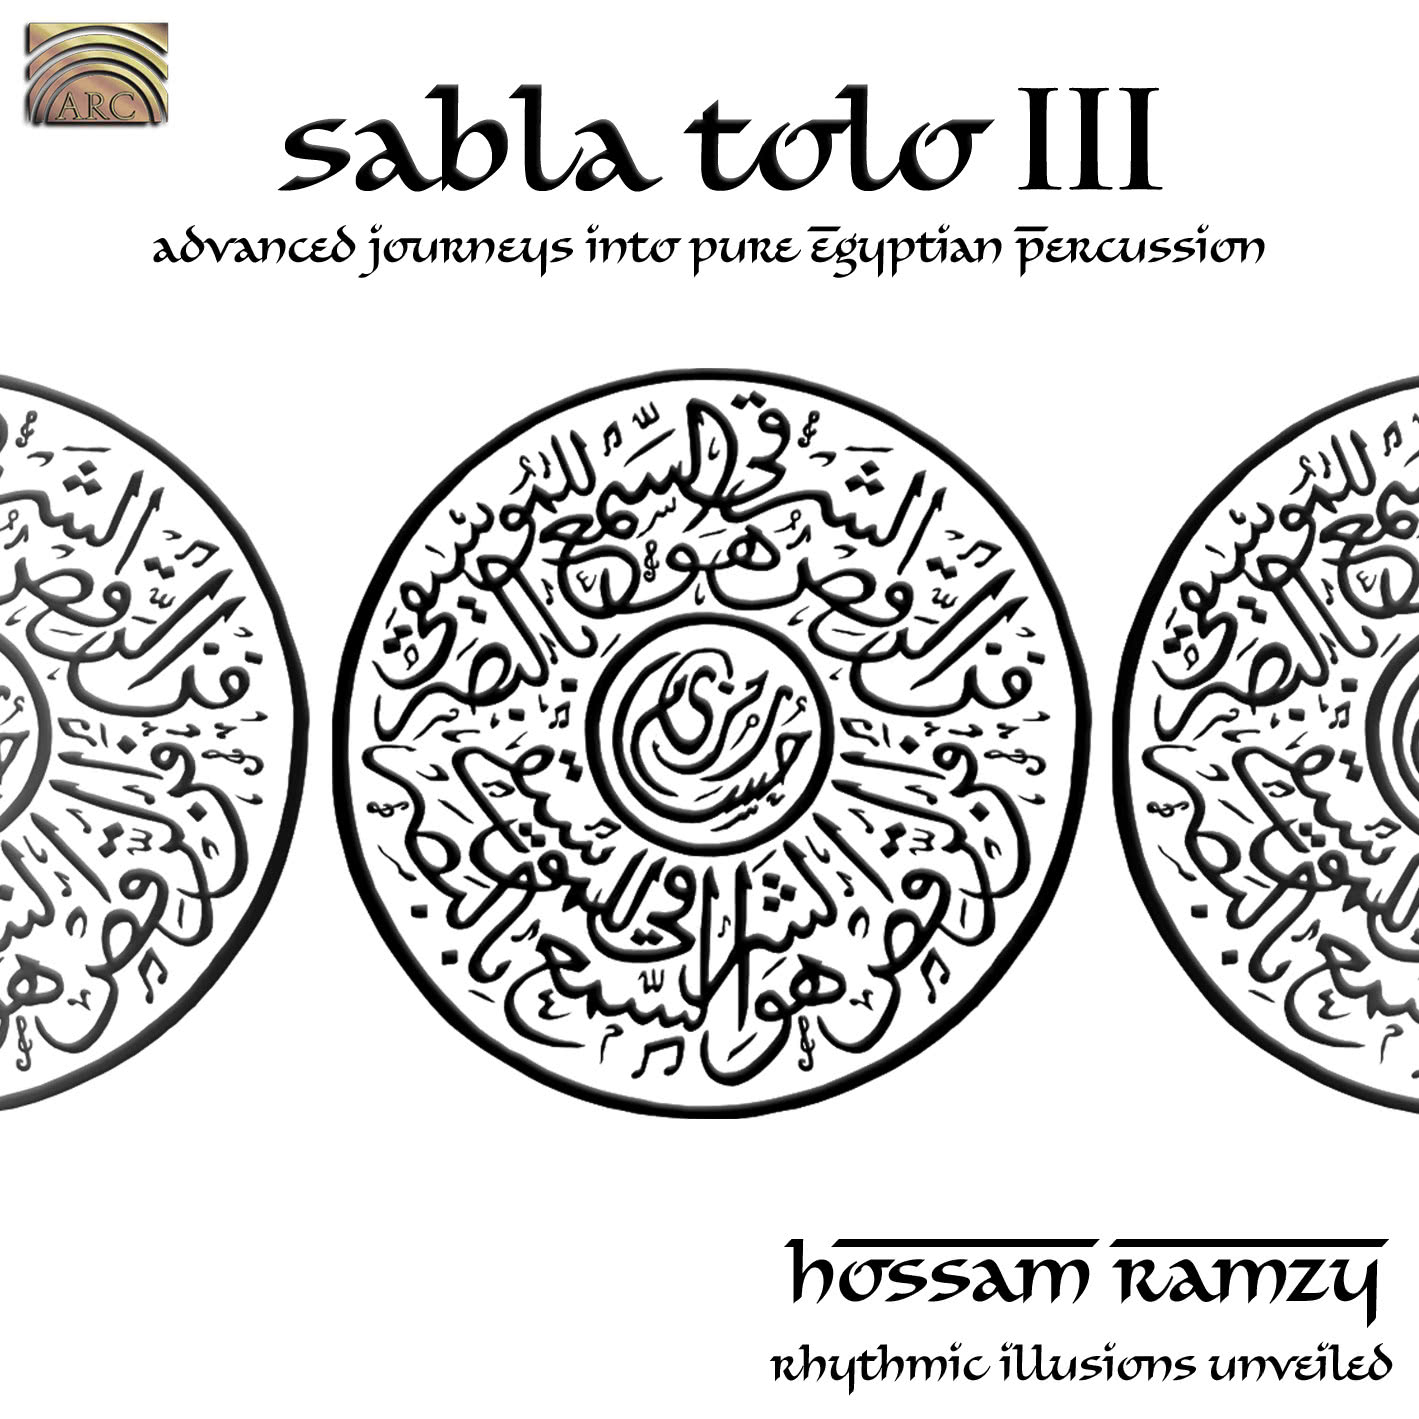 EUCD2158 Sabla Tolo III - Advanced Journeys into Pure Egyptian Percussion